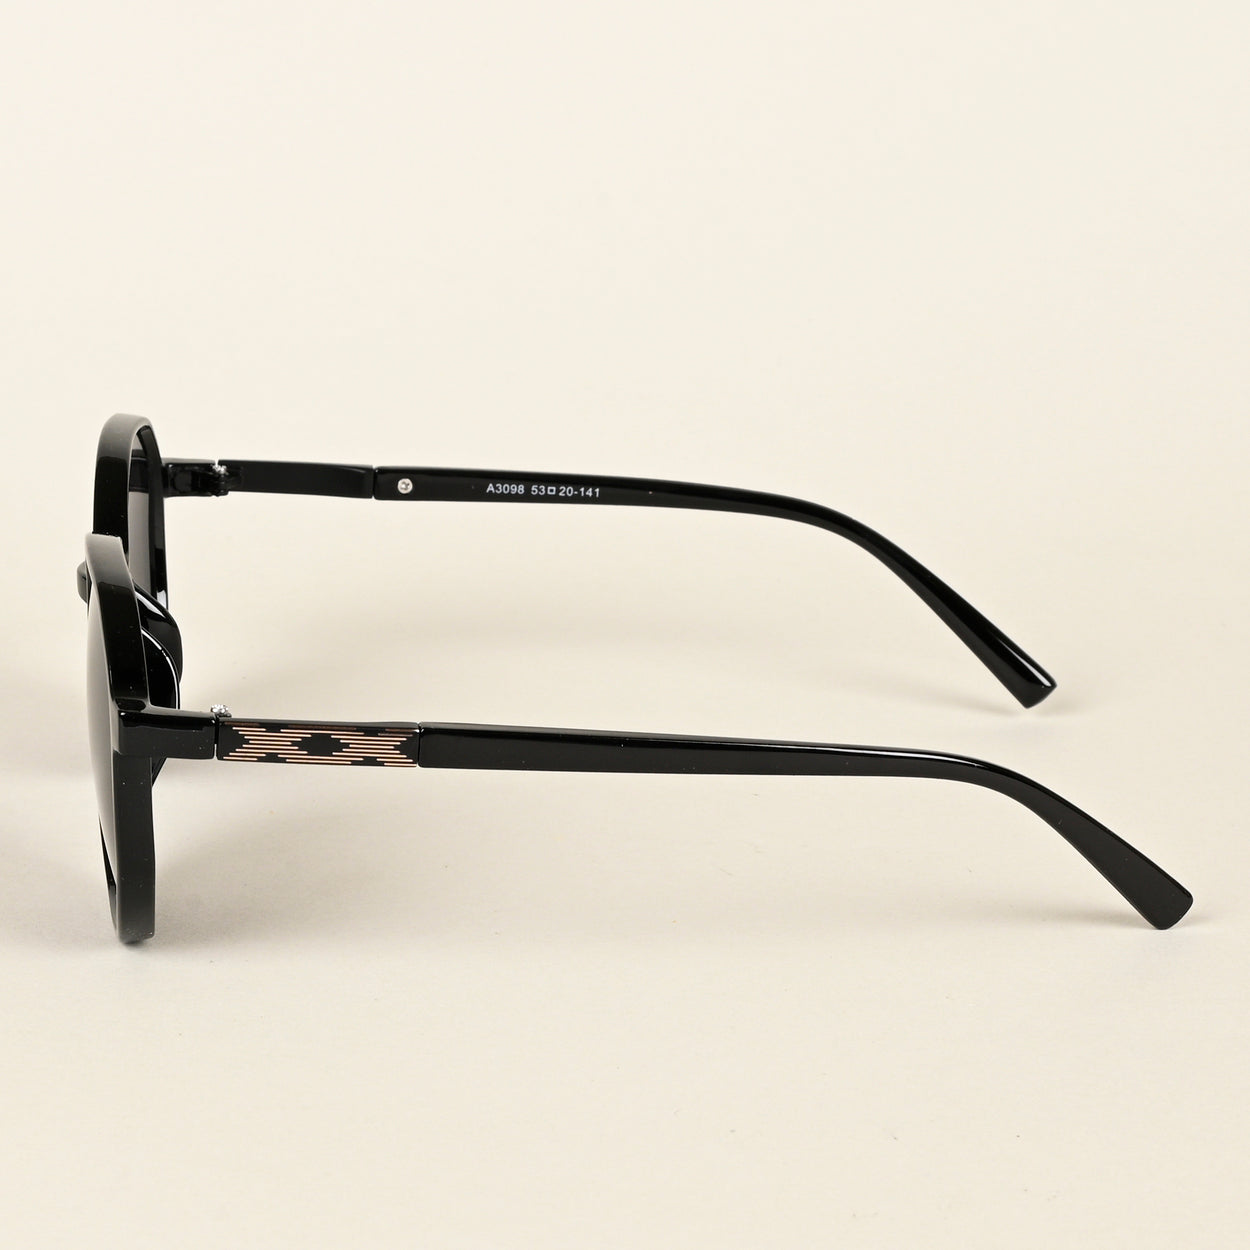 Voyage Black Geometric Sunglasses for Women (A3098MG4246)